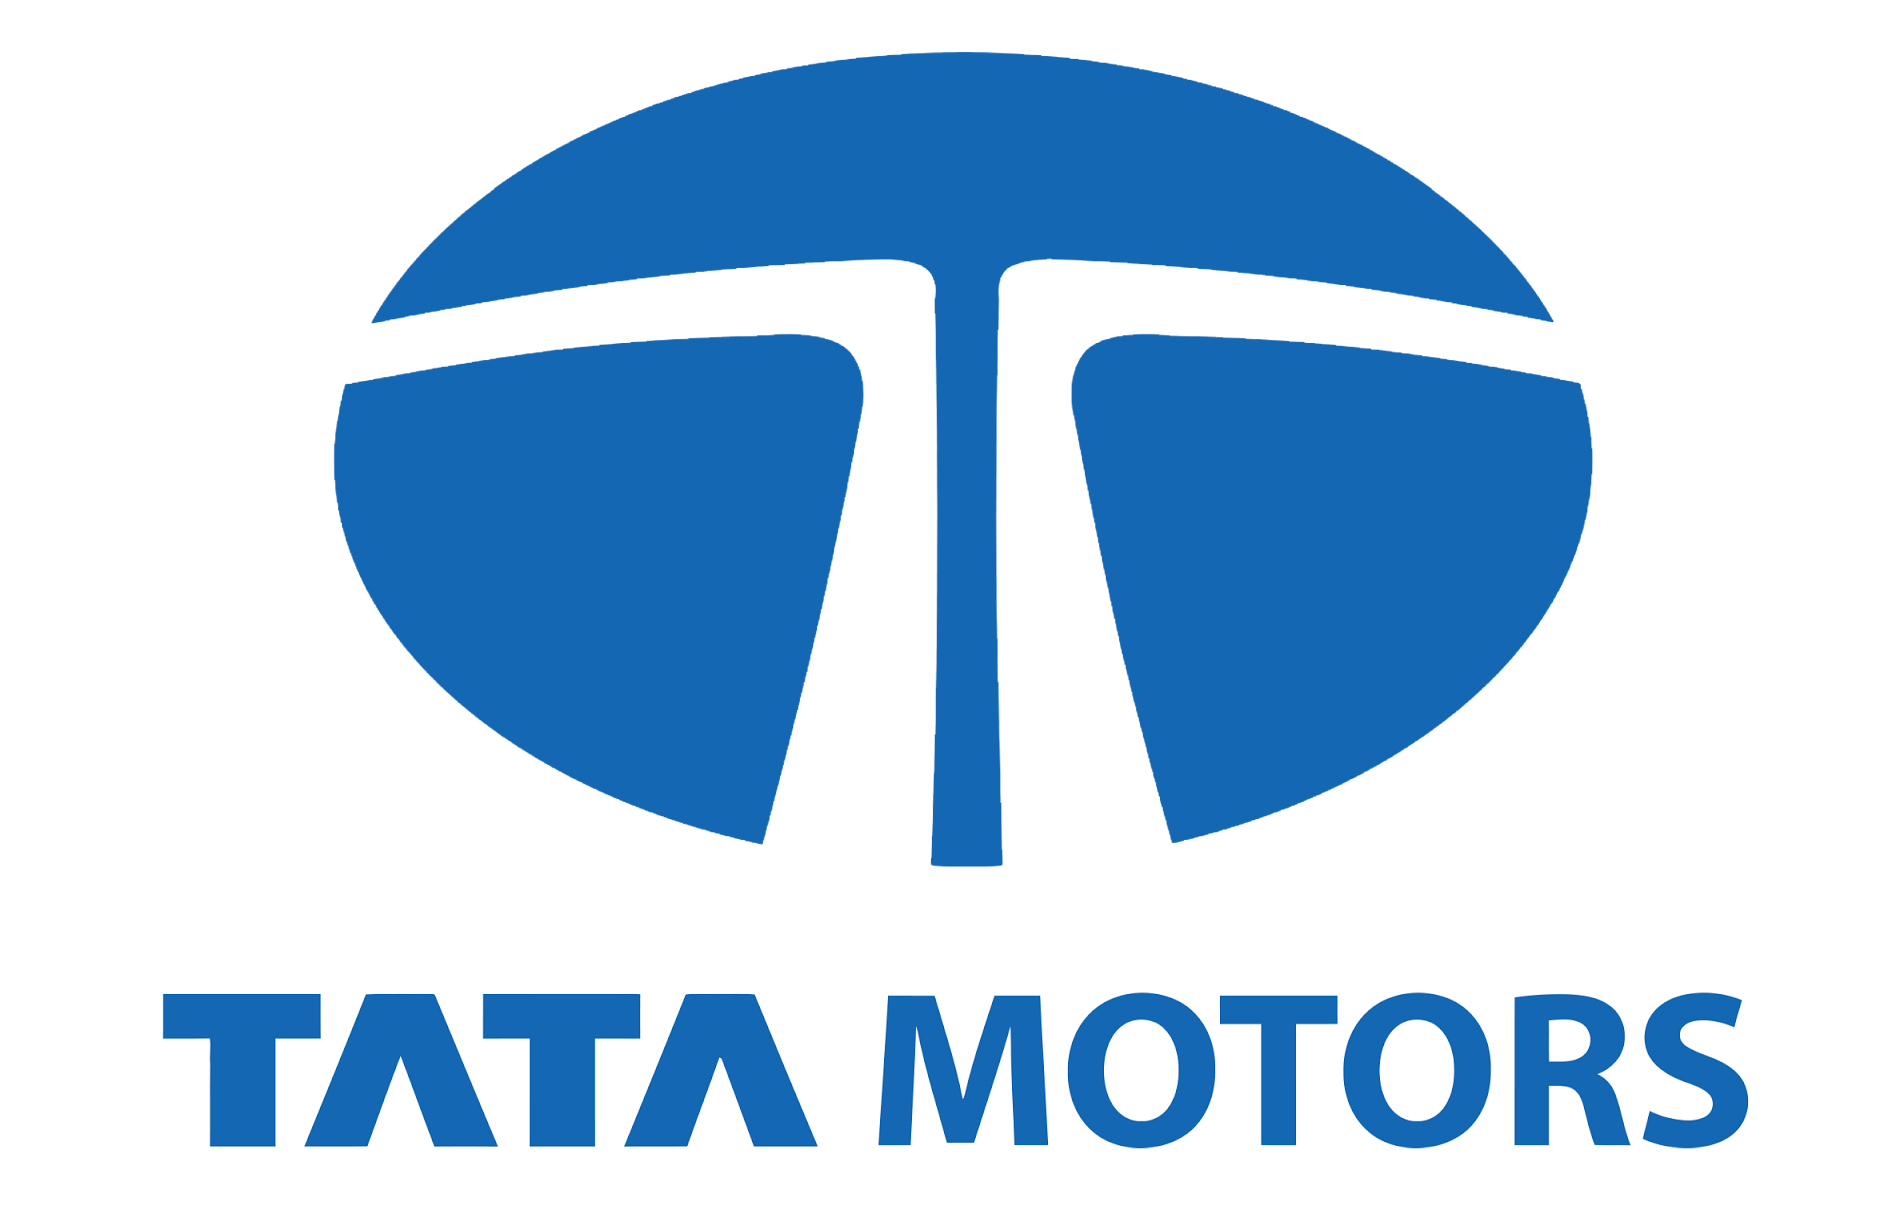 Tata Motors Cars Showroom - Banerjee Automobiles|Show Room|Automotive